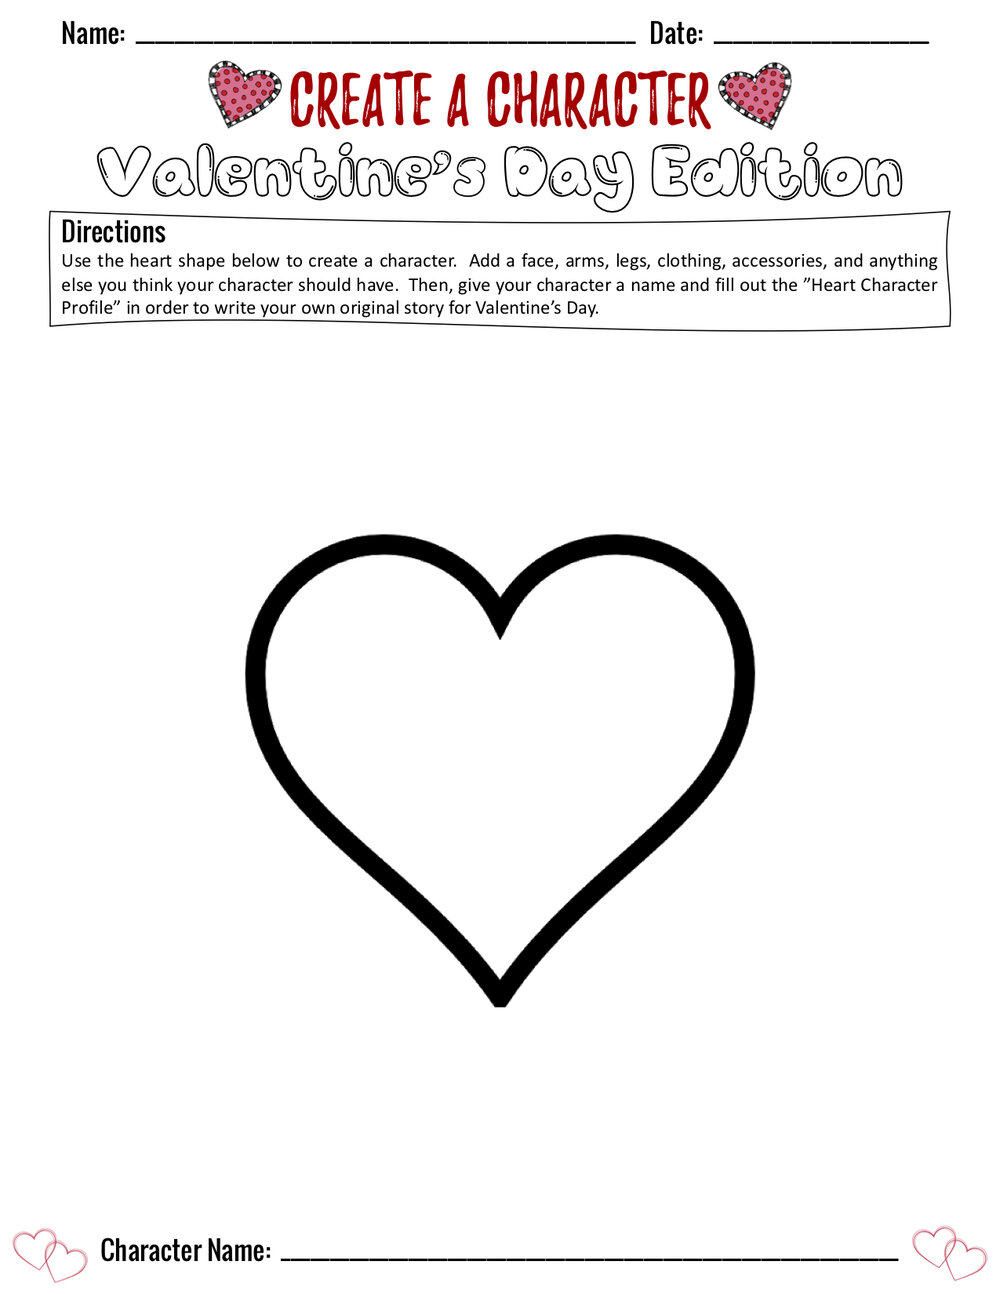 Valentine's Day Writing Activity for Elementary by Bespoke ELA4.jpg